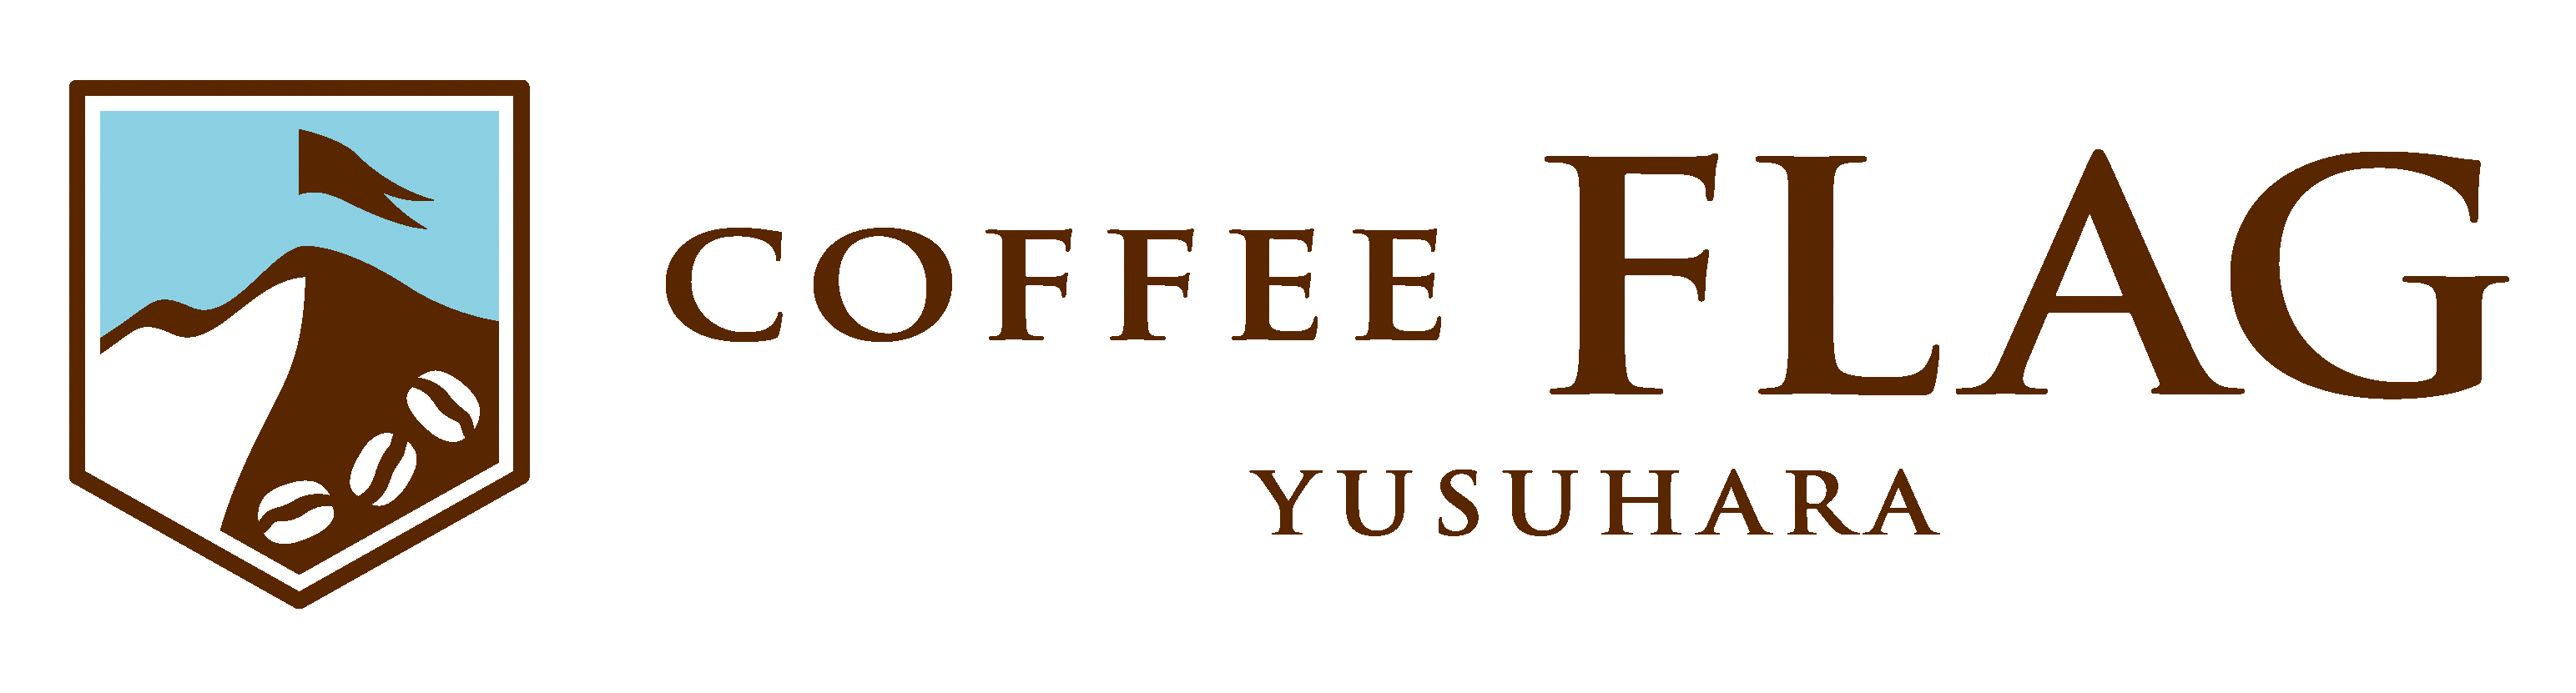 COFFEE FLAG